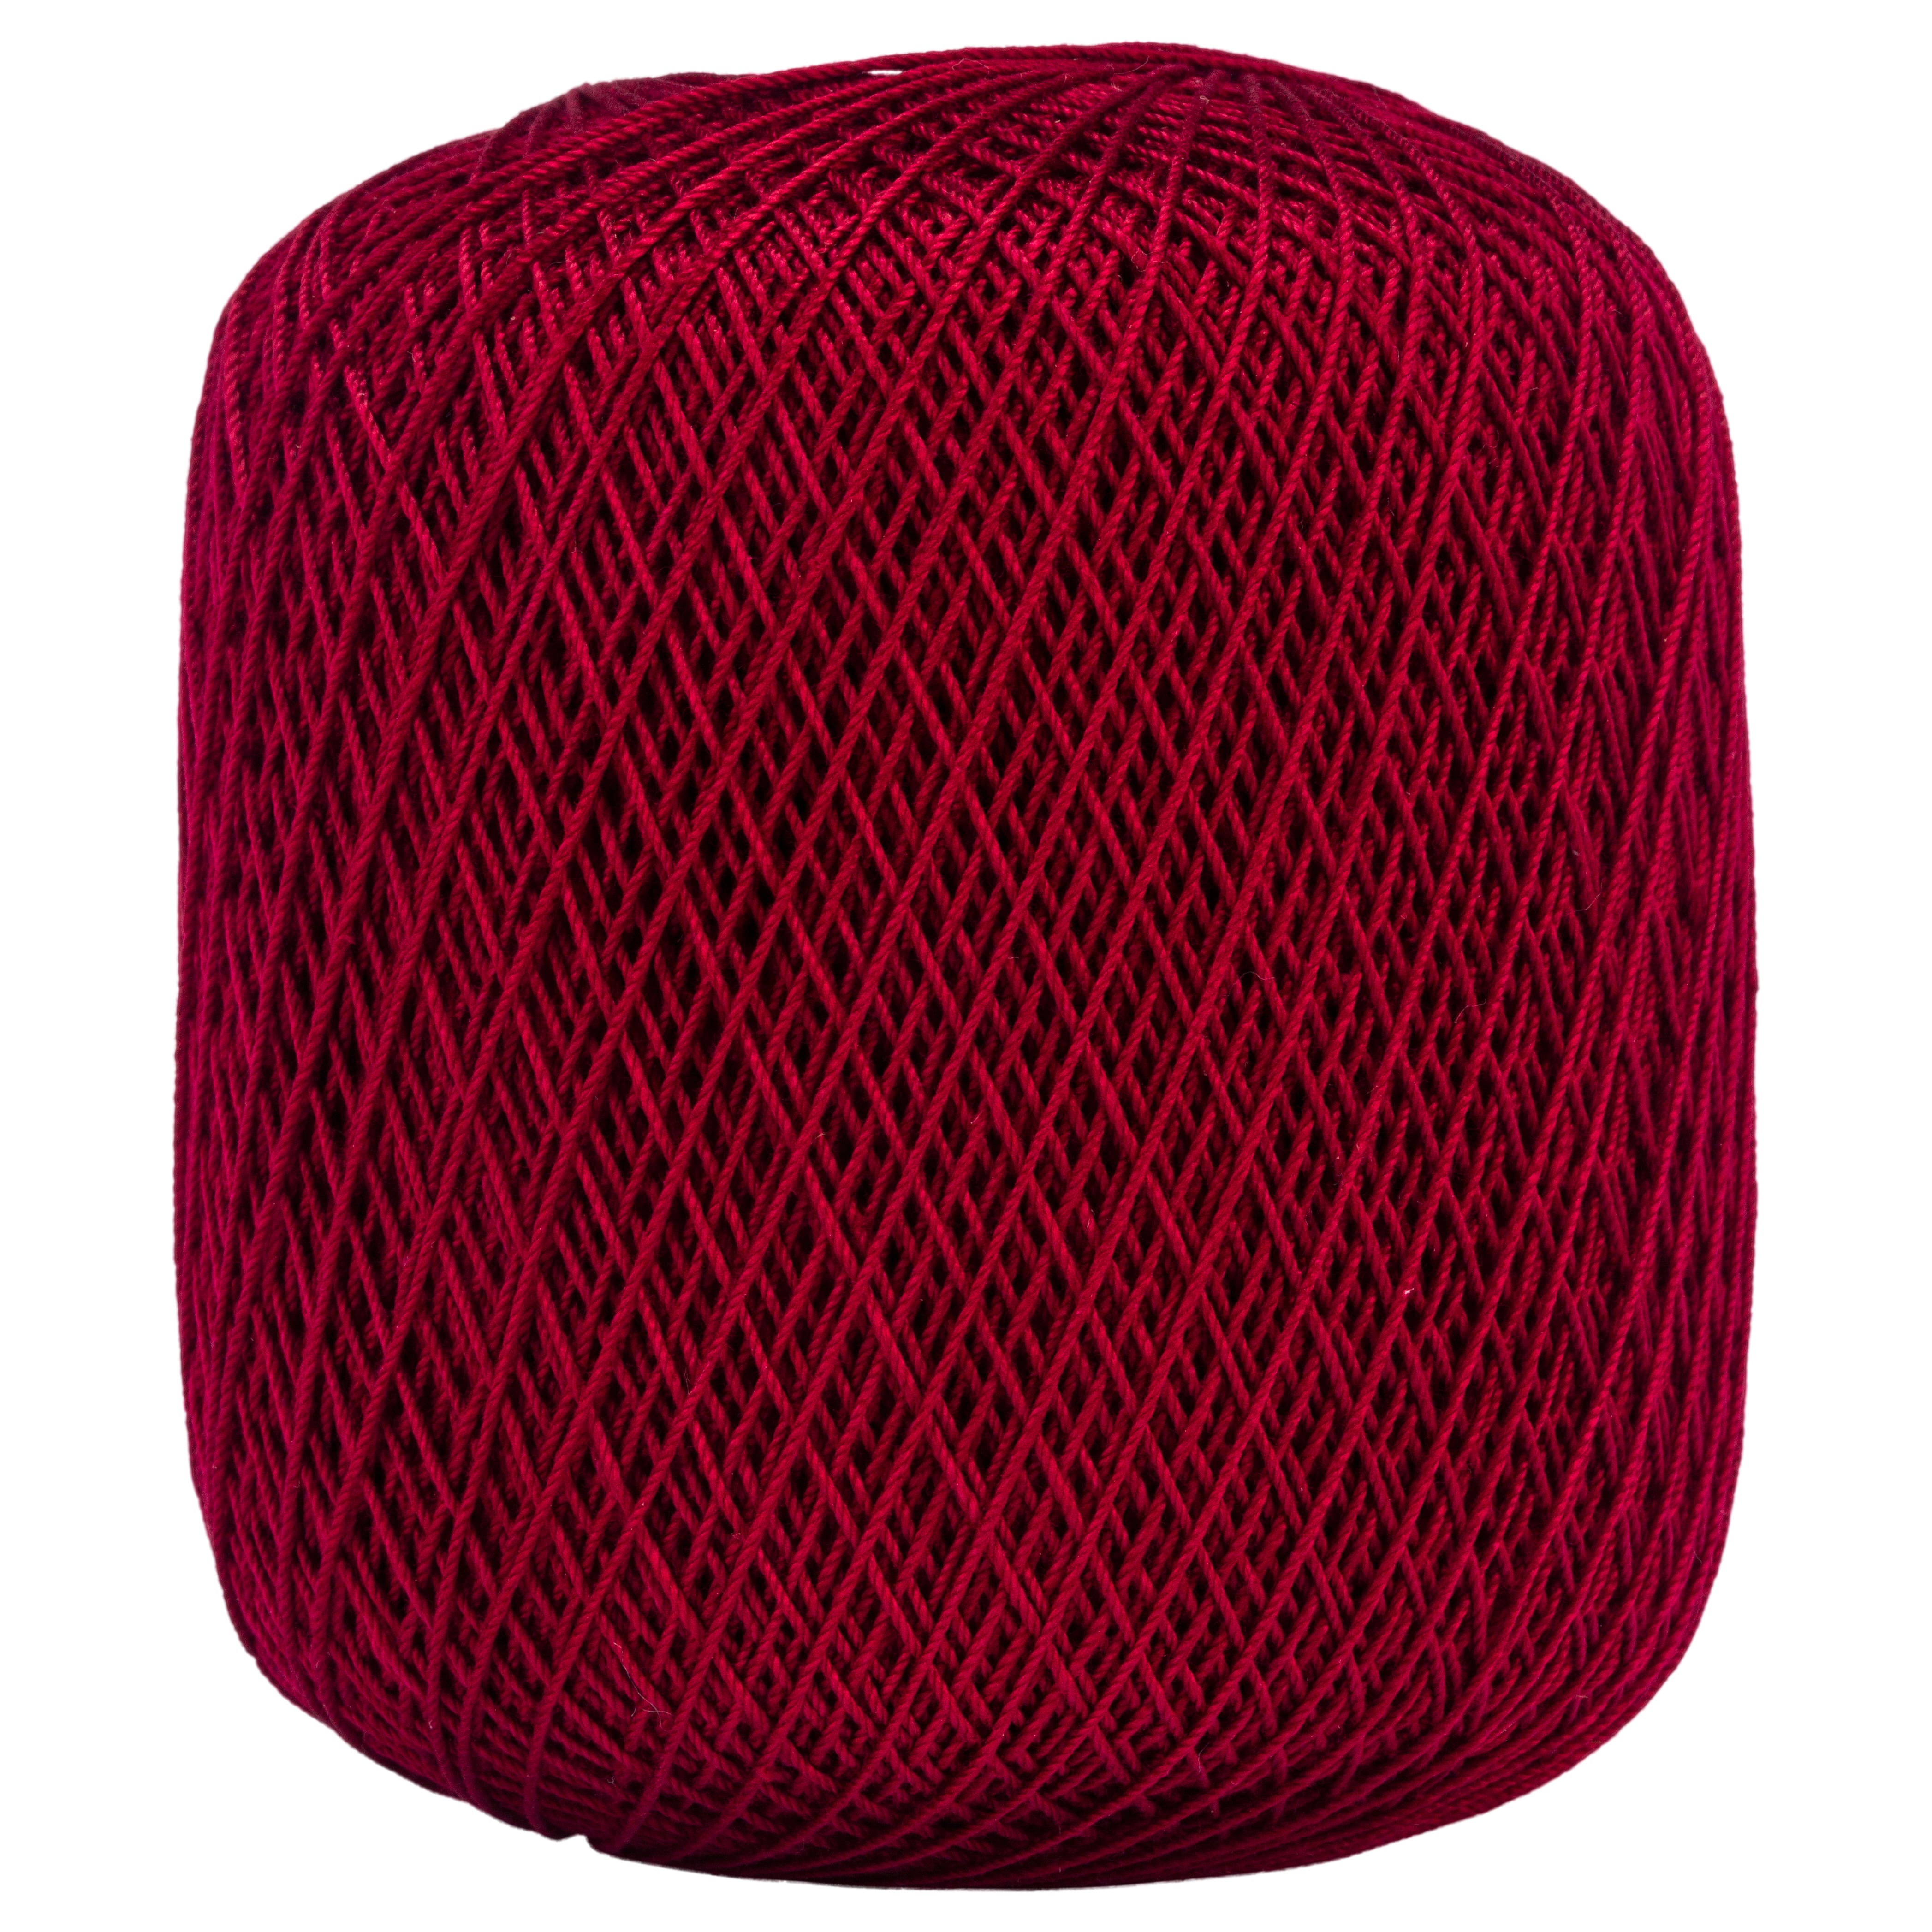 Boye Crochet Hooks & Thread Lot South Maid & Lily Cotton Peach Red 350 Yds  